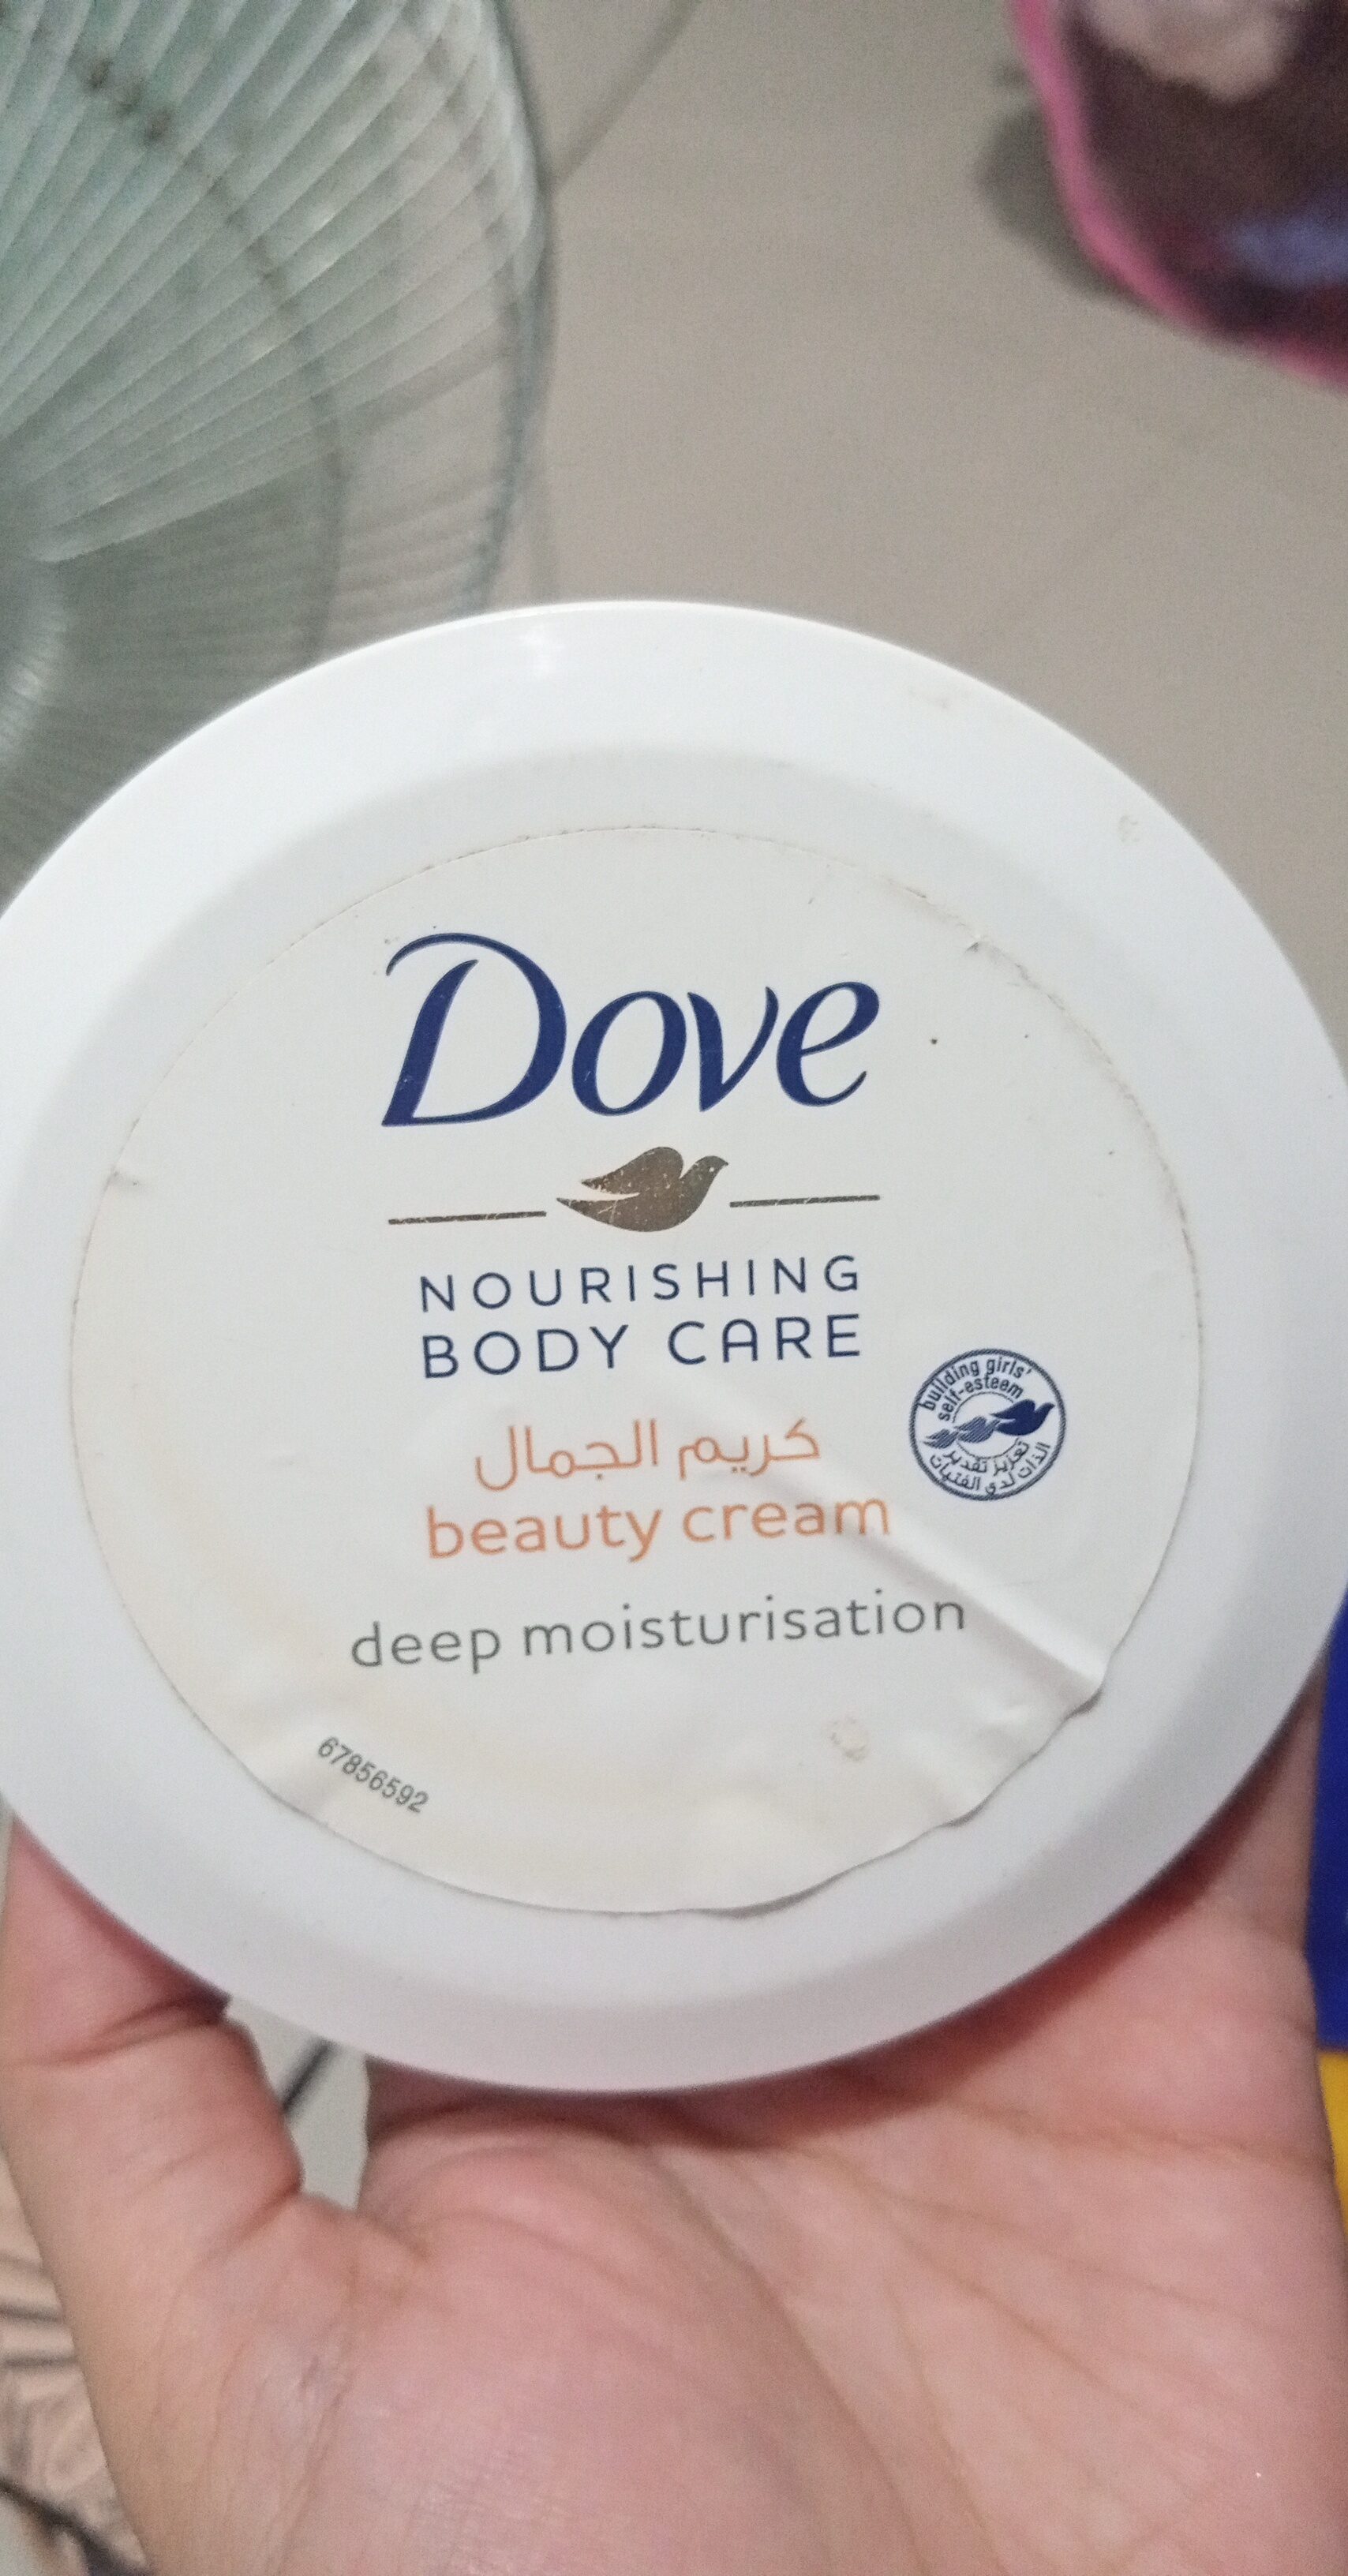 Dove nourishing body care beauty cream - מוצר - en